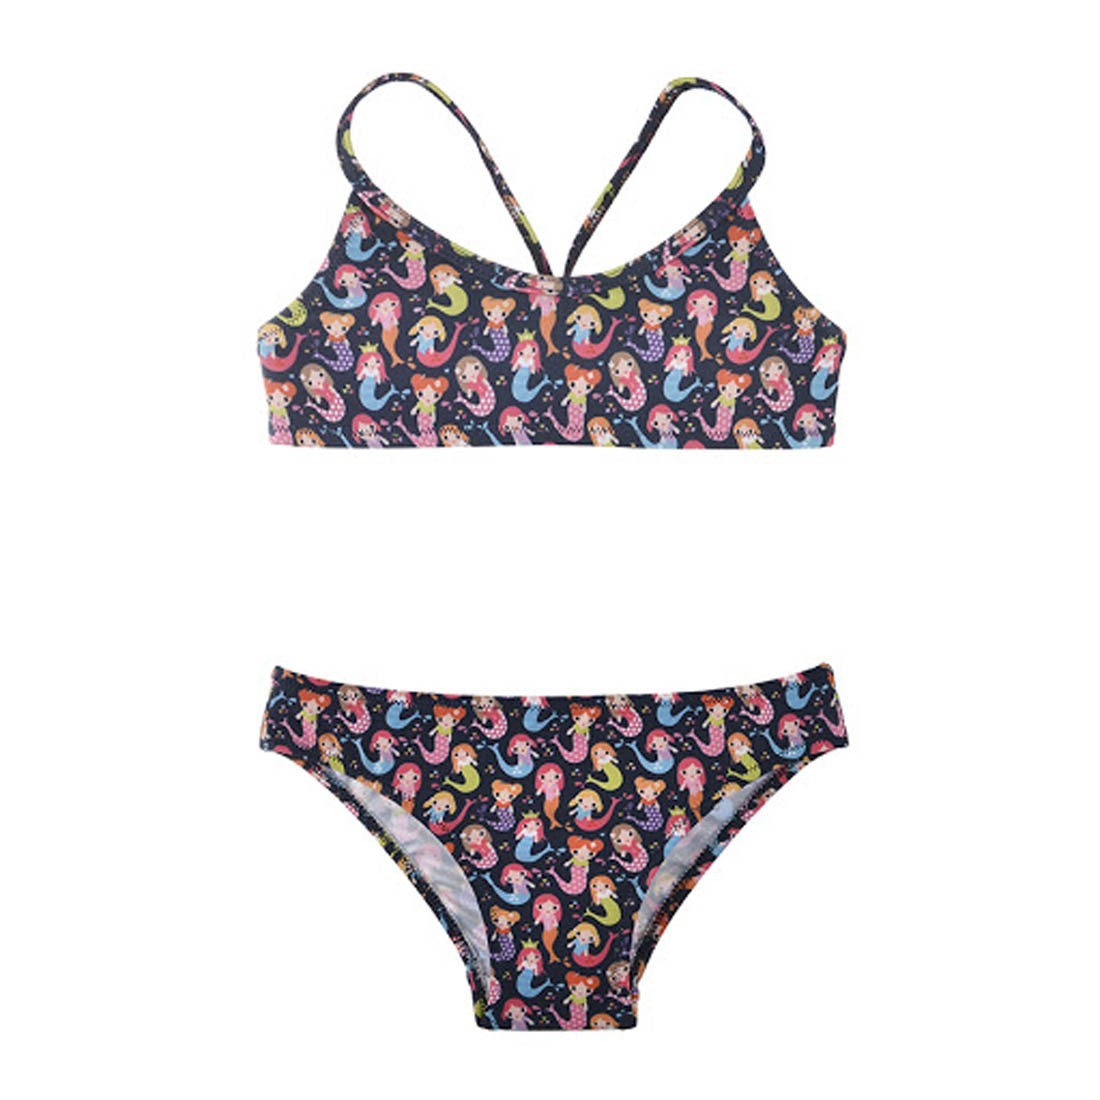 Order SlipStop Mermaid Bikini - SlipStop, delivered to your home ...